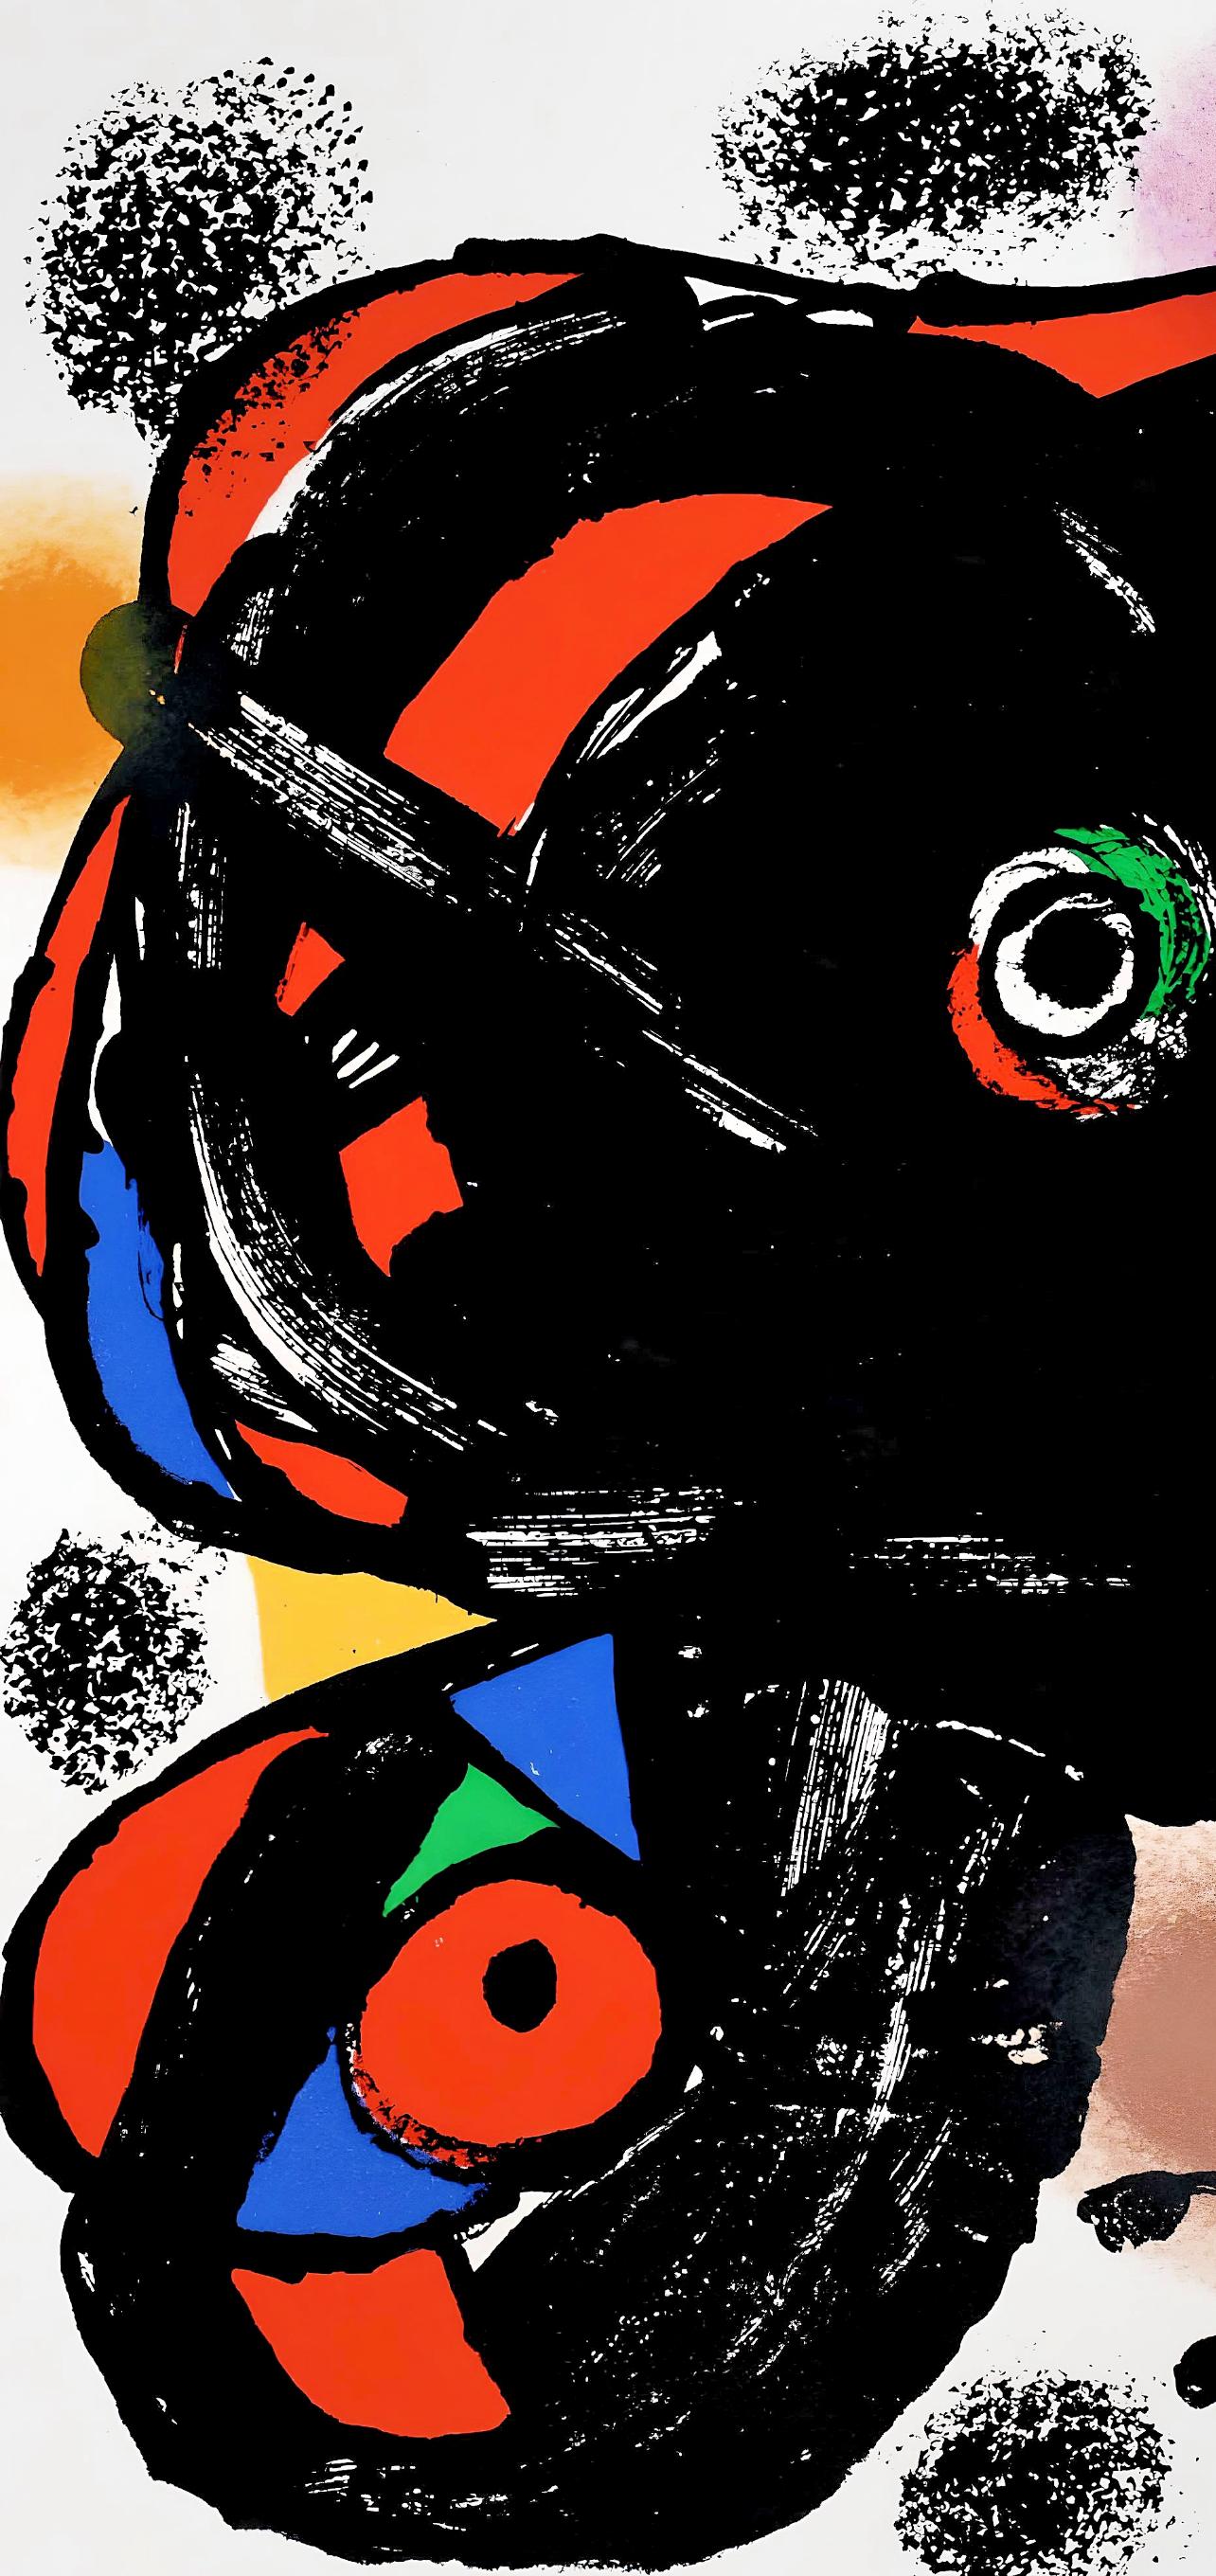 Miró, Komposition, XXe Siècle (nach) (Moderne), Print, von Joan Miró